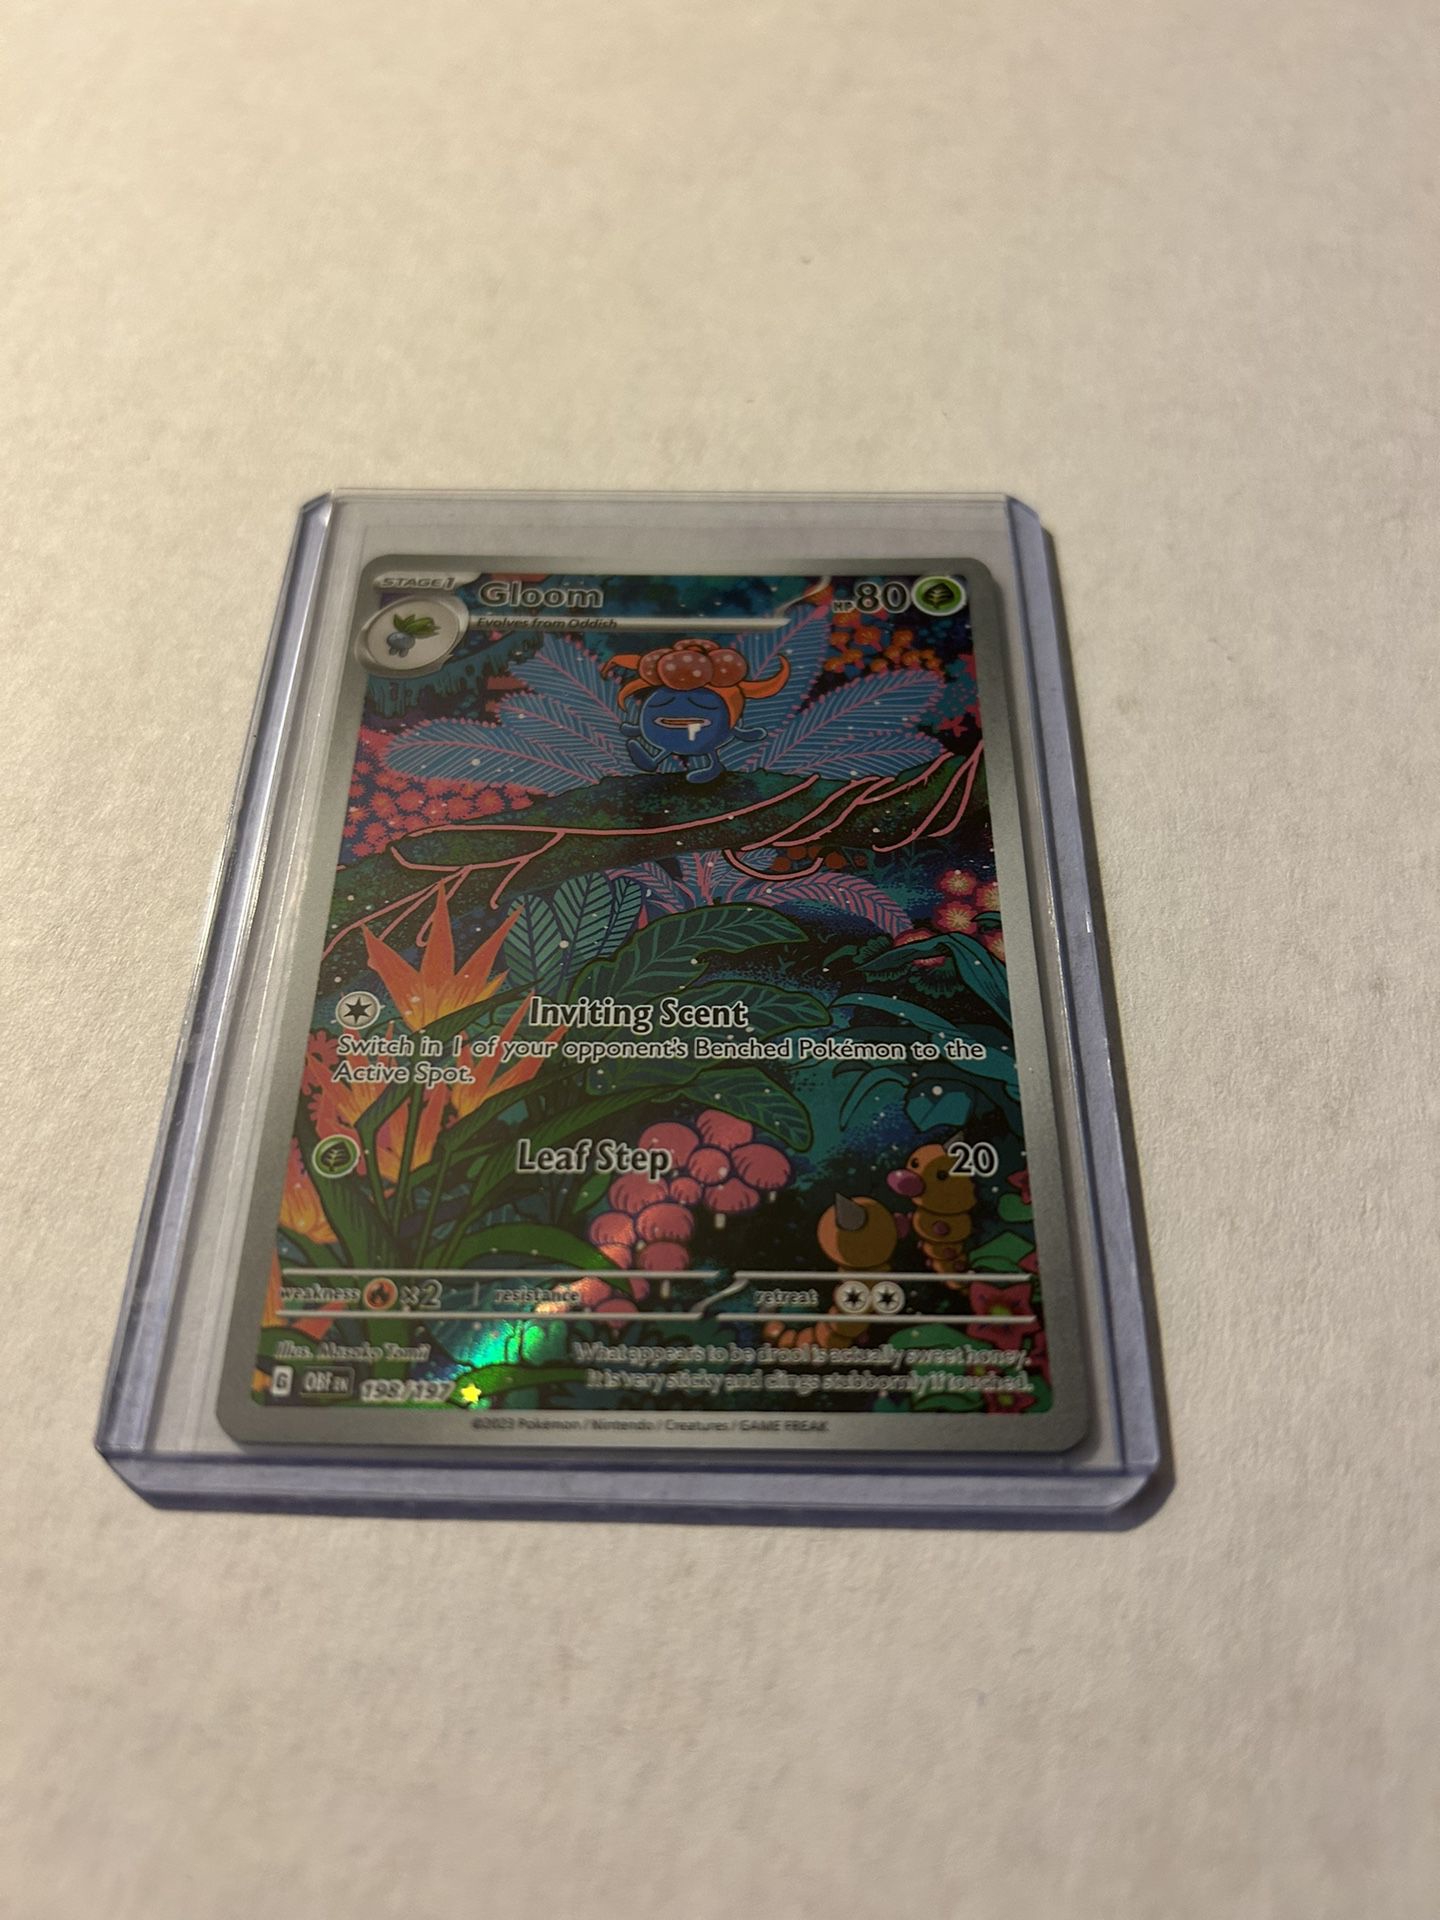 Pokémon TCG Poppy SV03: Obsidian Flames 220/197 Holo Ultra Rare for Sale in  Phoenix, AZ - OfferUp